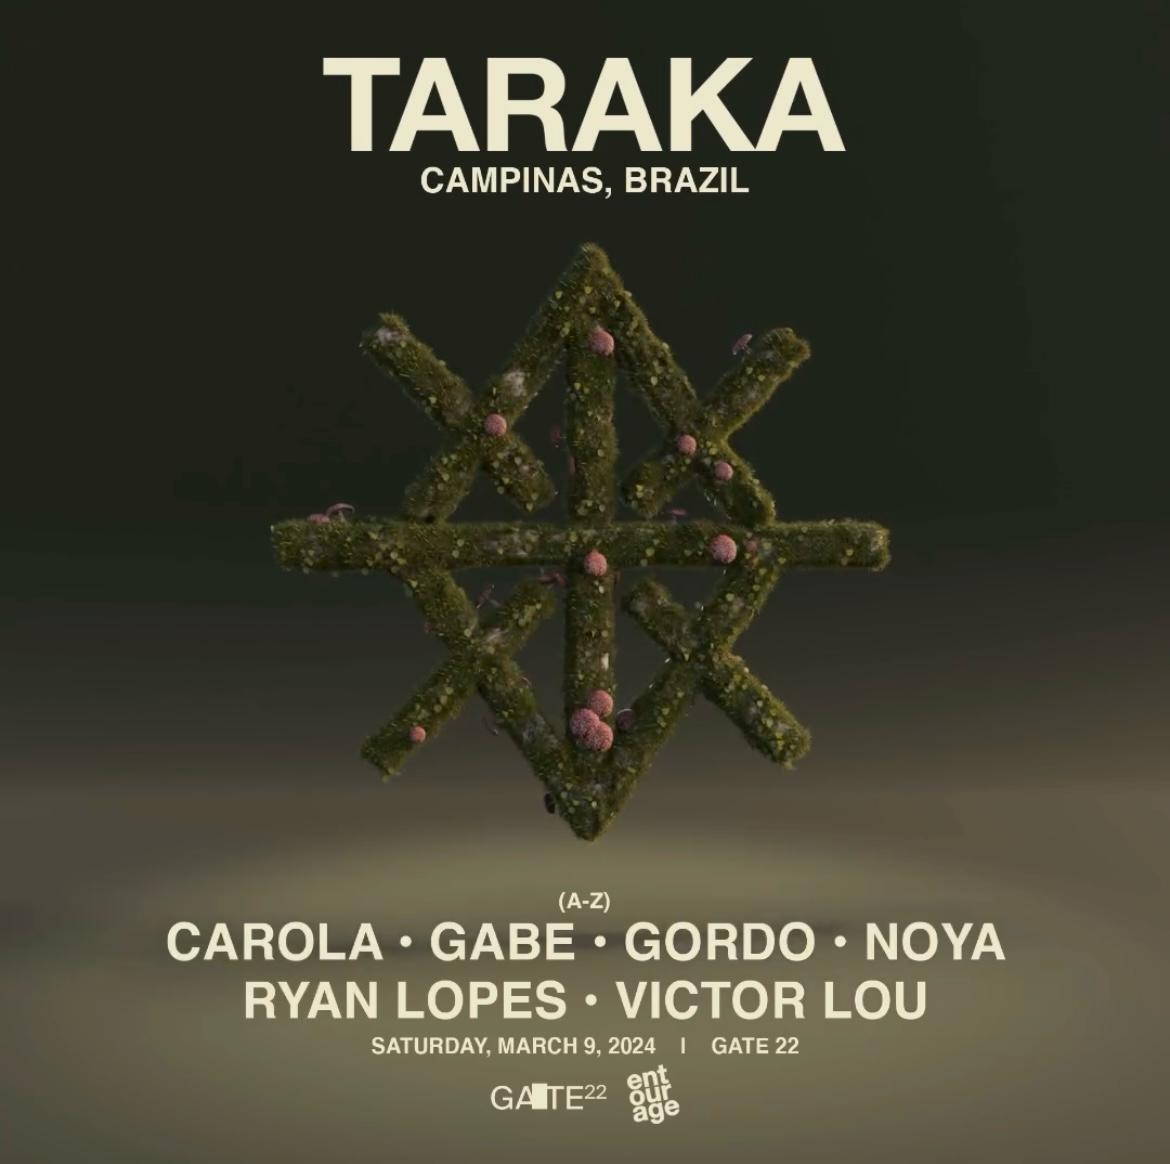 GATE22 | Gordo presents Taraka